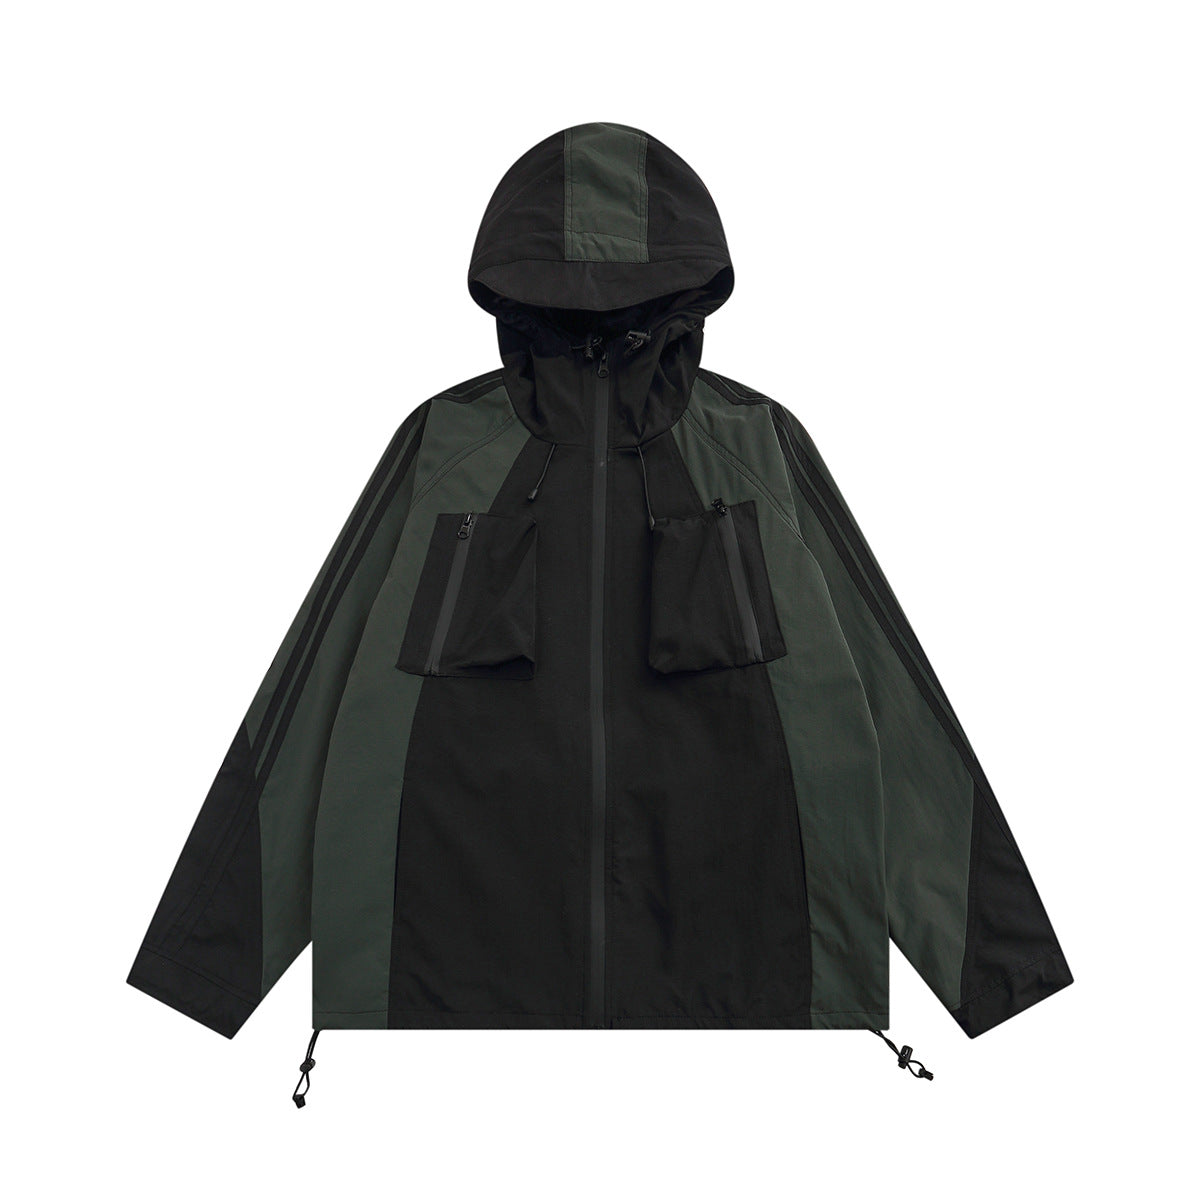 Waterproof Jacket Coat Female Stitching